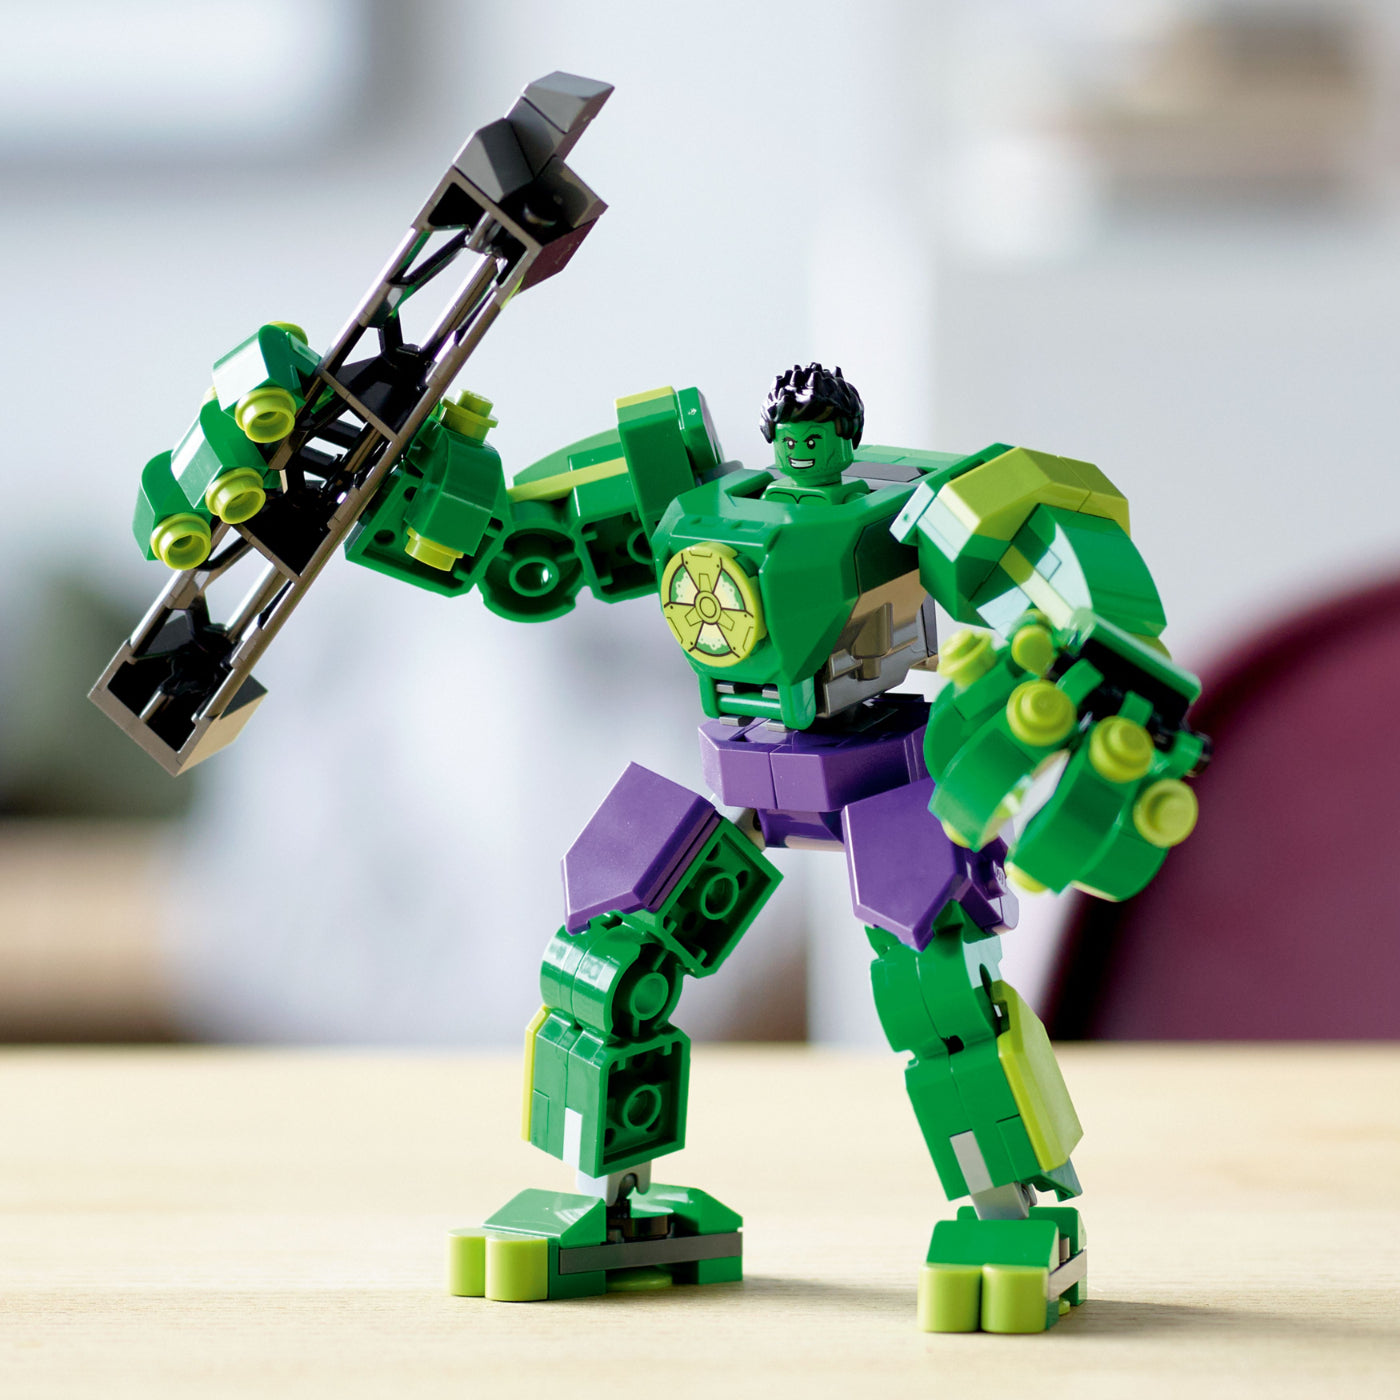 LEGO® Marvel Armadura Robótica de Hulk (76241)